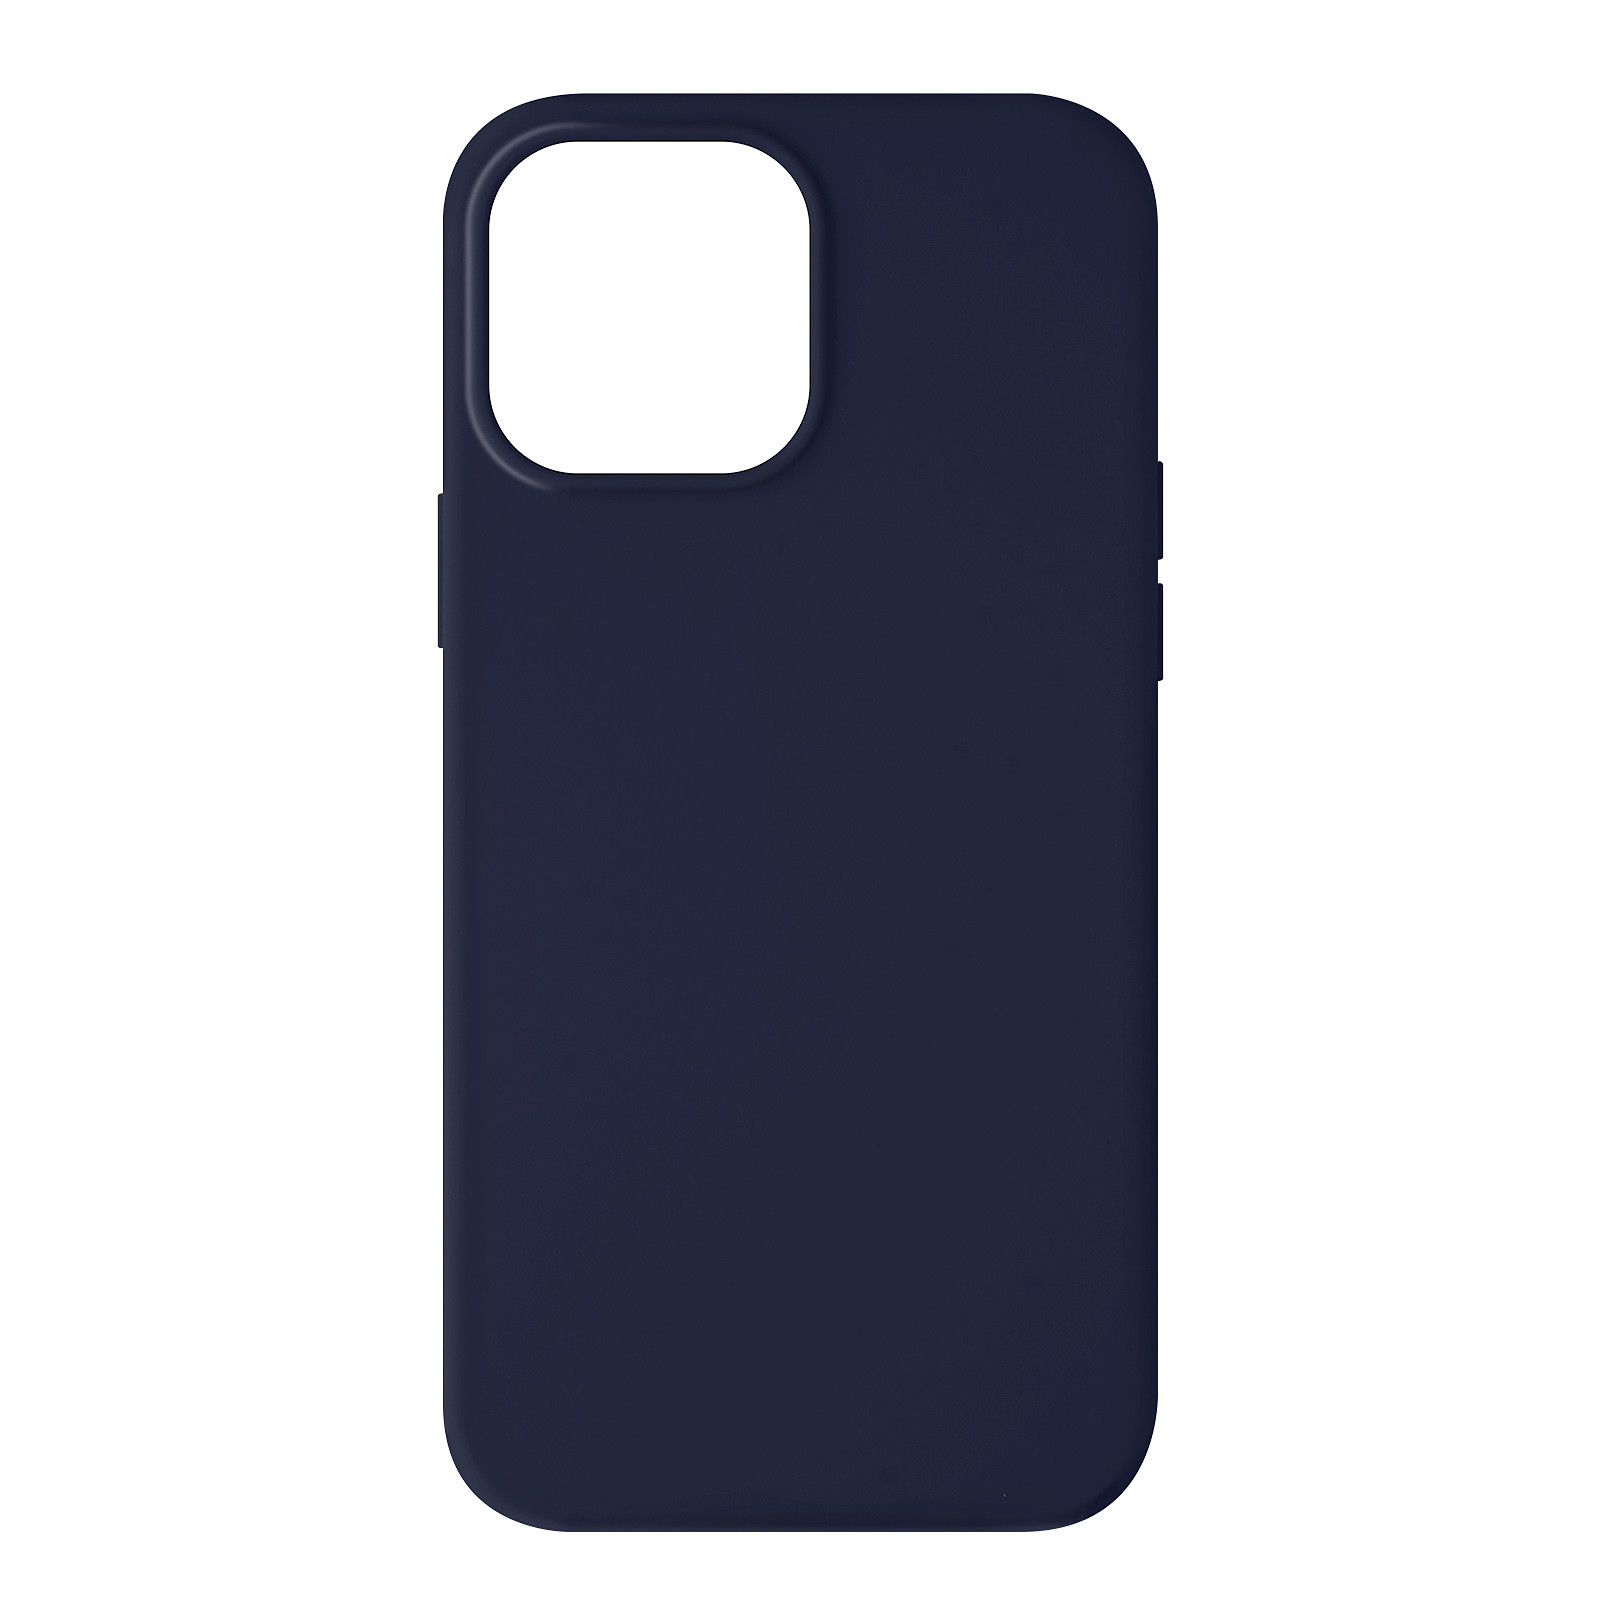 Avizar Coque pour iPhone 13 Pro Max Silicone Semi-rigide Finition Soft-touch Bleu Nuit - Coque telephone Avizar